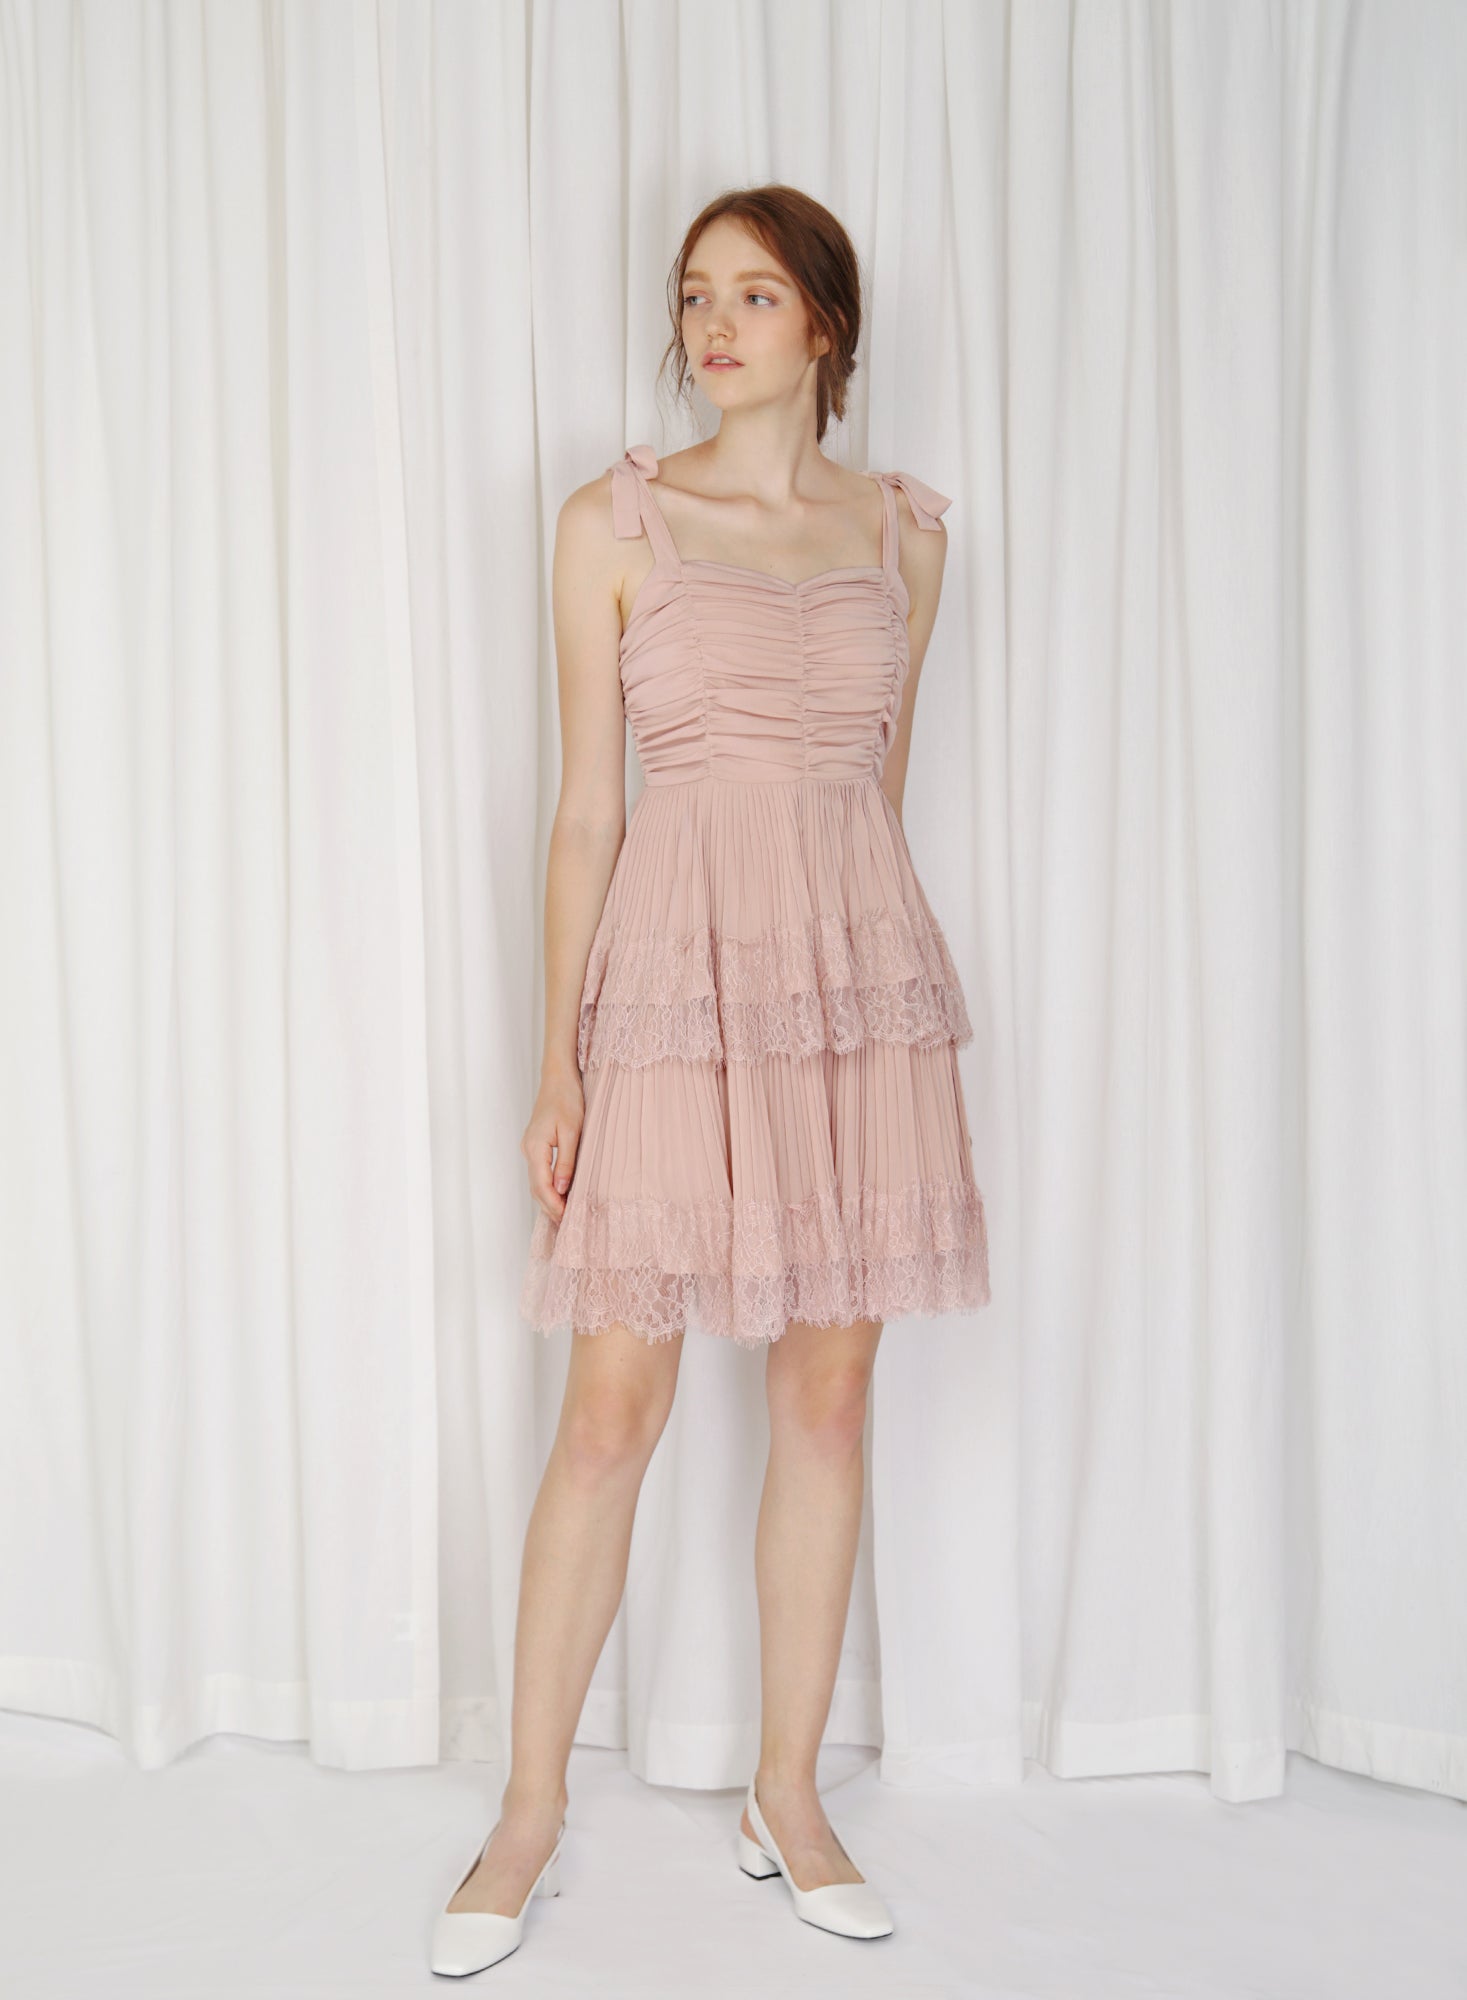 Fractus Lace Trim Pleated Dress (Blush)